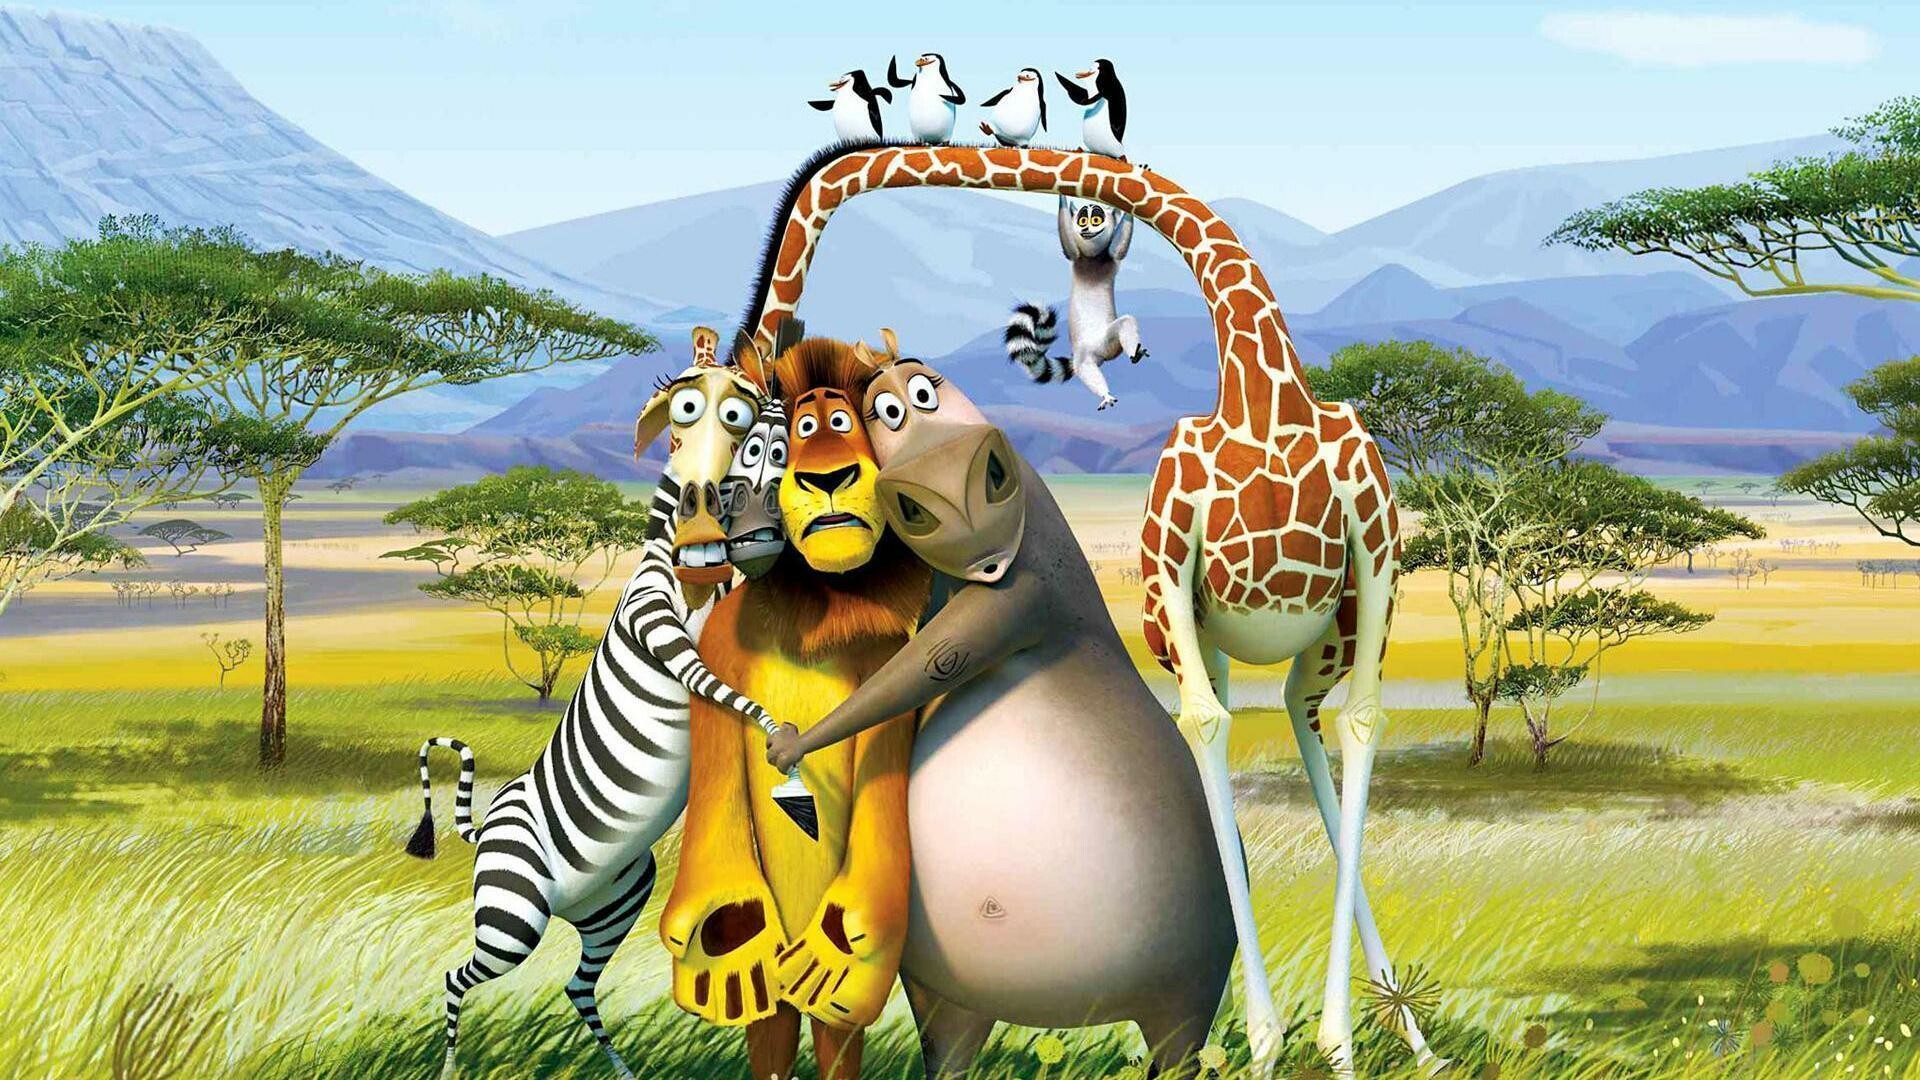 Madagascar (Movie): The adventures of the zoo animals, Lion, Zebra, Giraffe, Hippo. 1920x1080 Full HD Background.